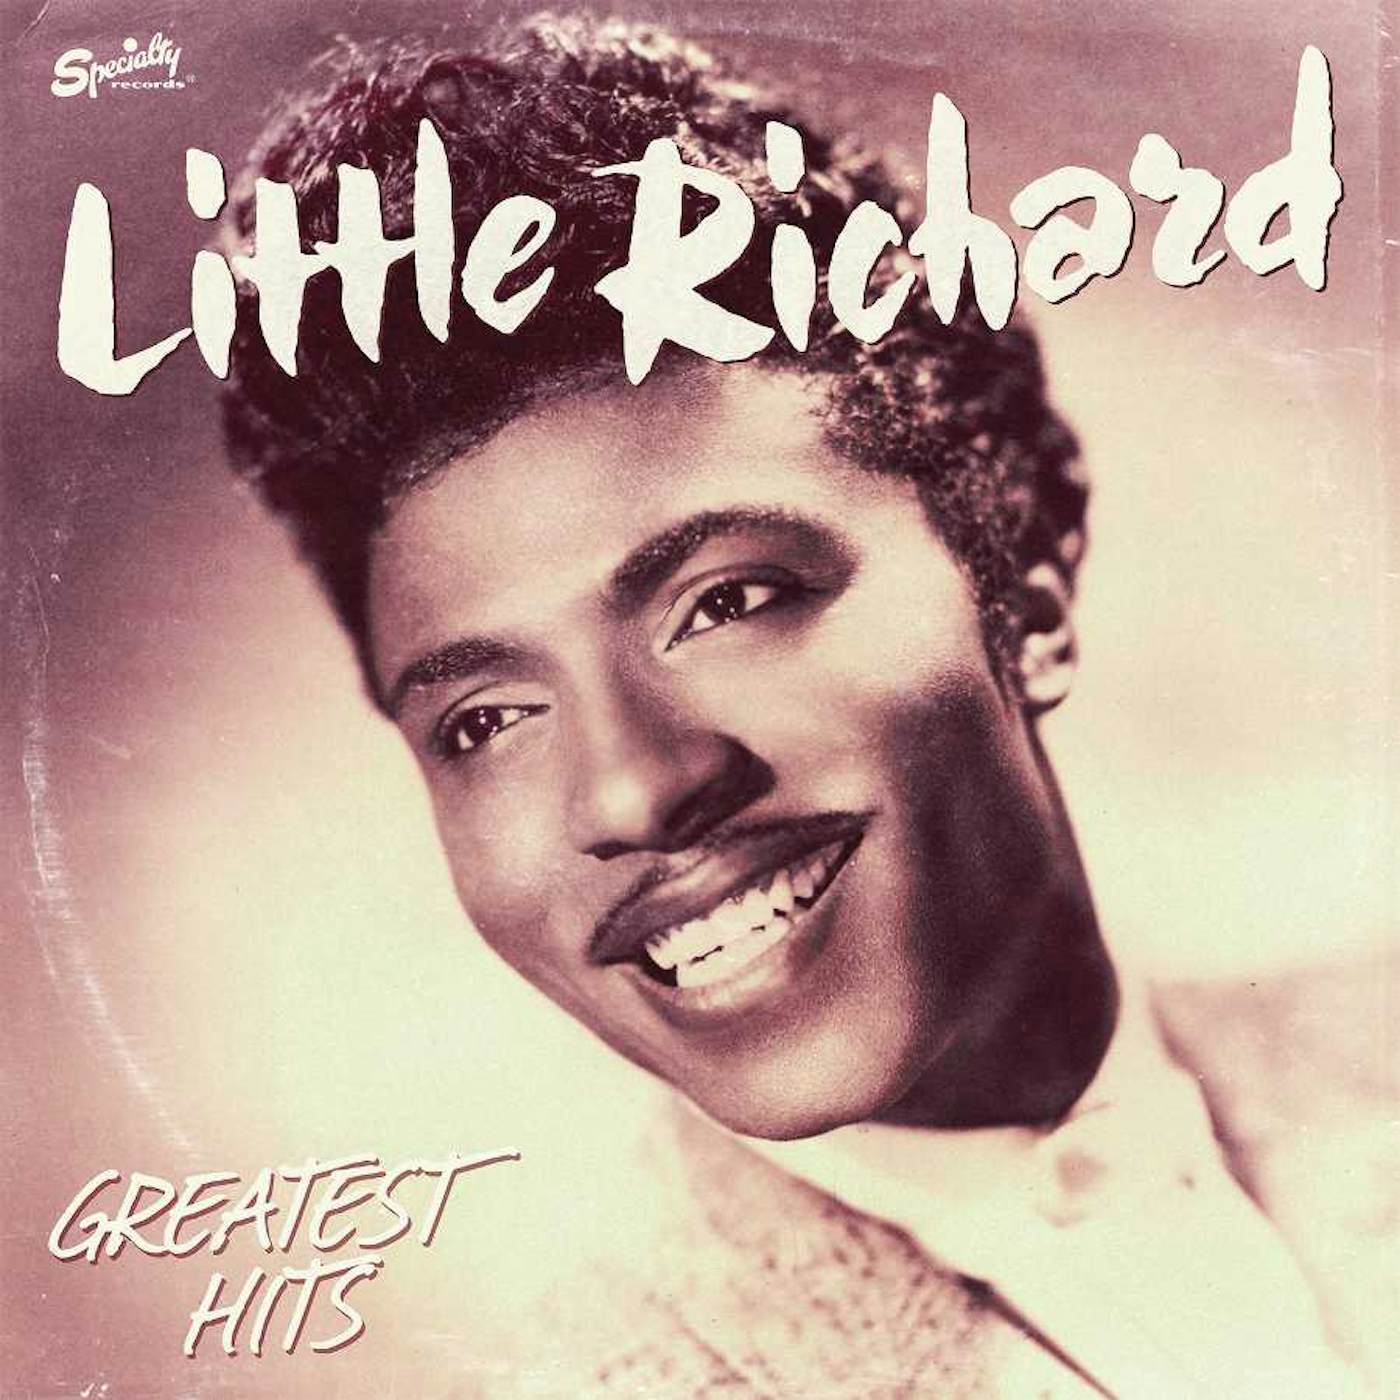 Little Richard GREATEST HITS Vinyl Record